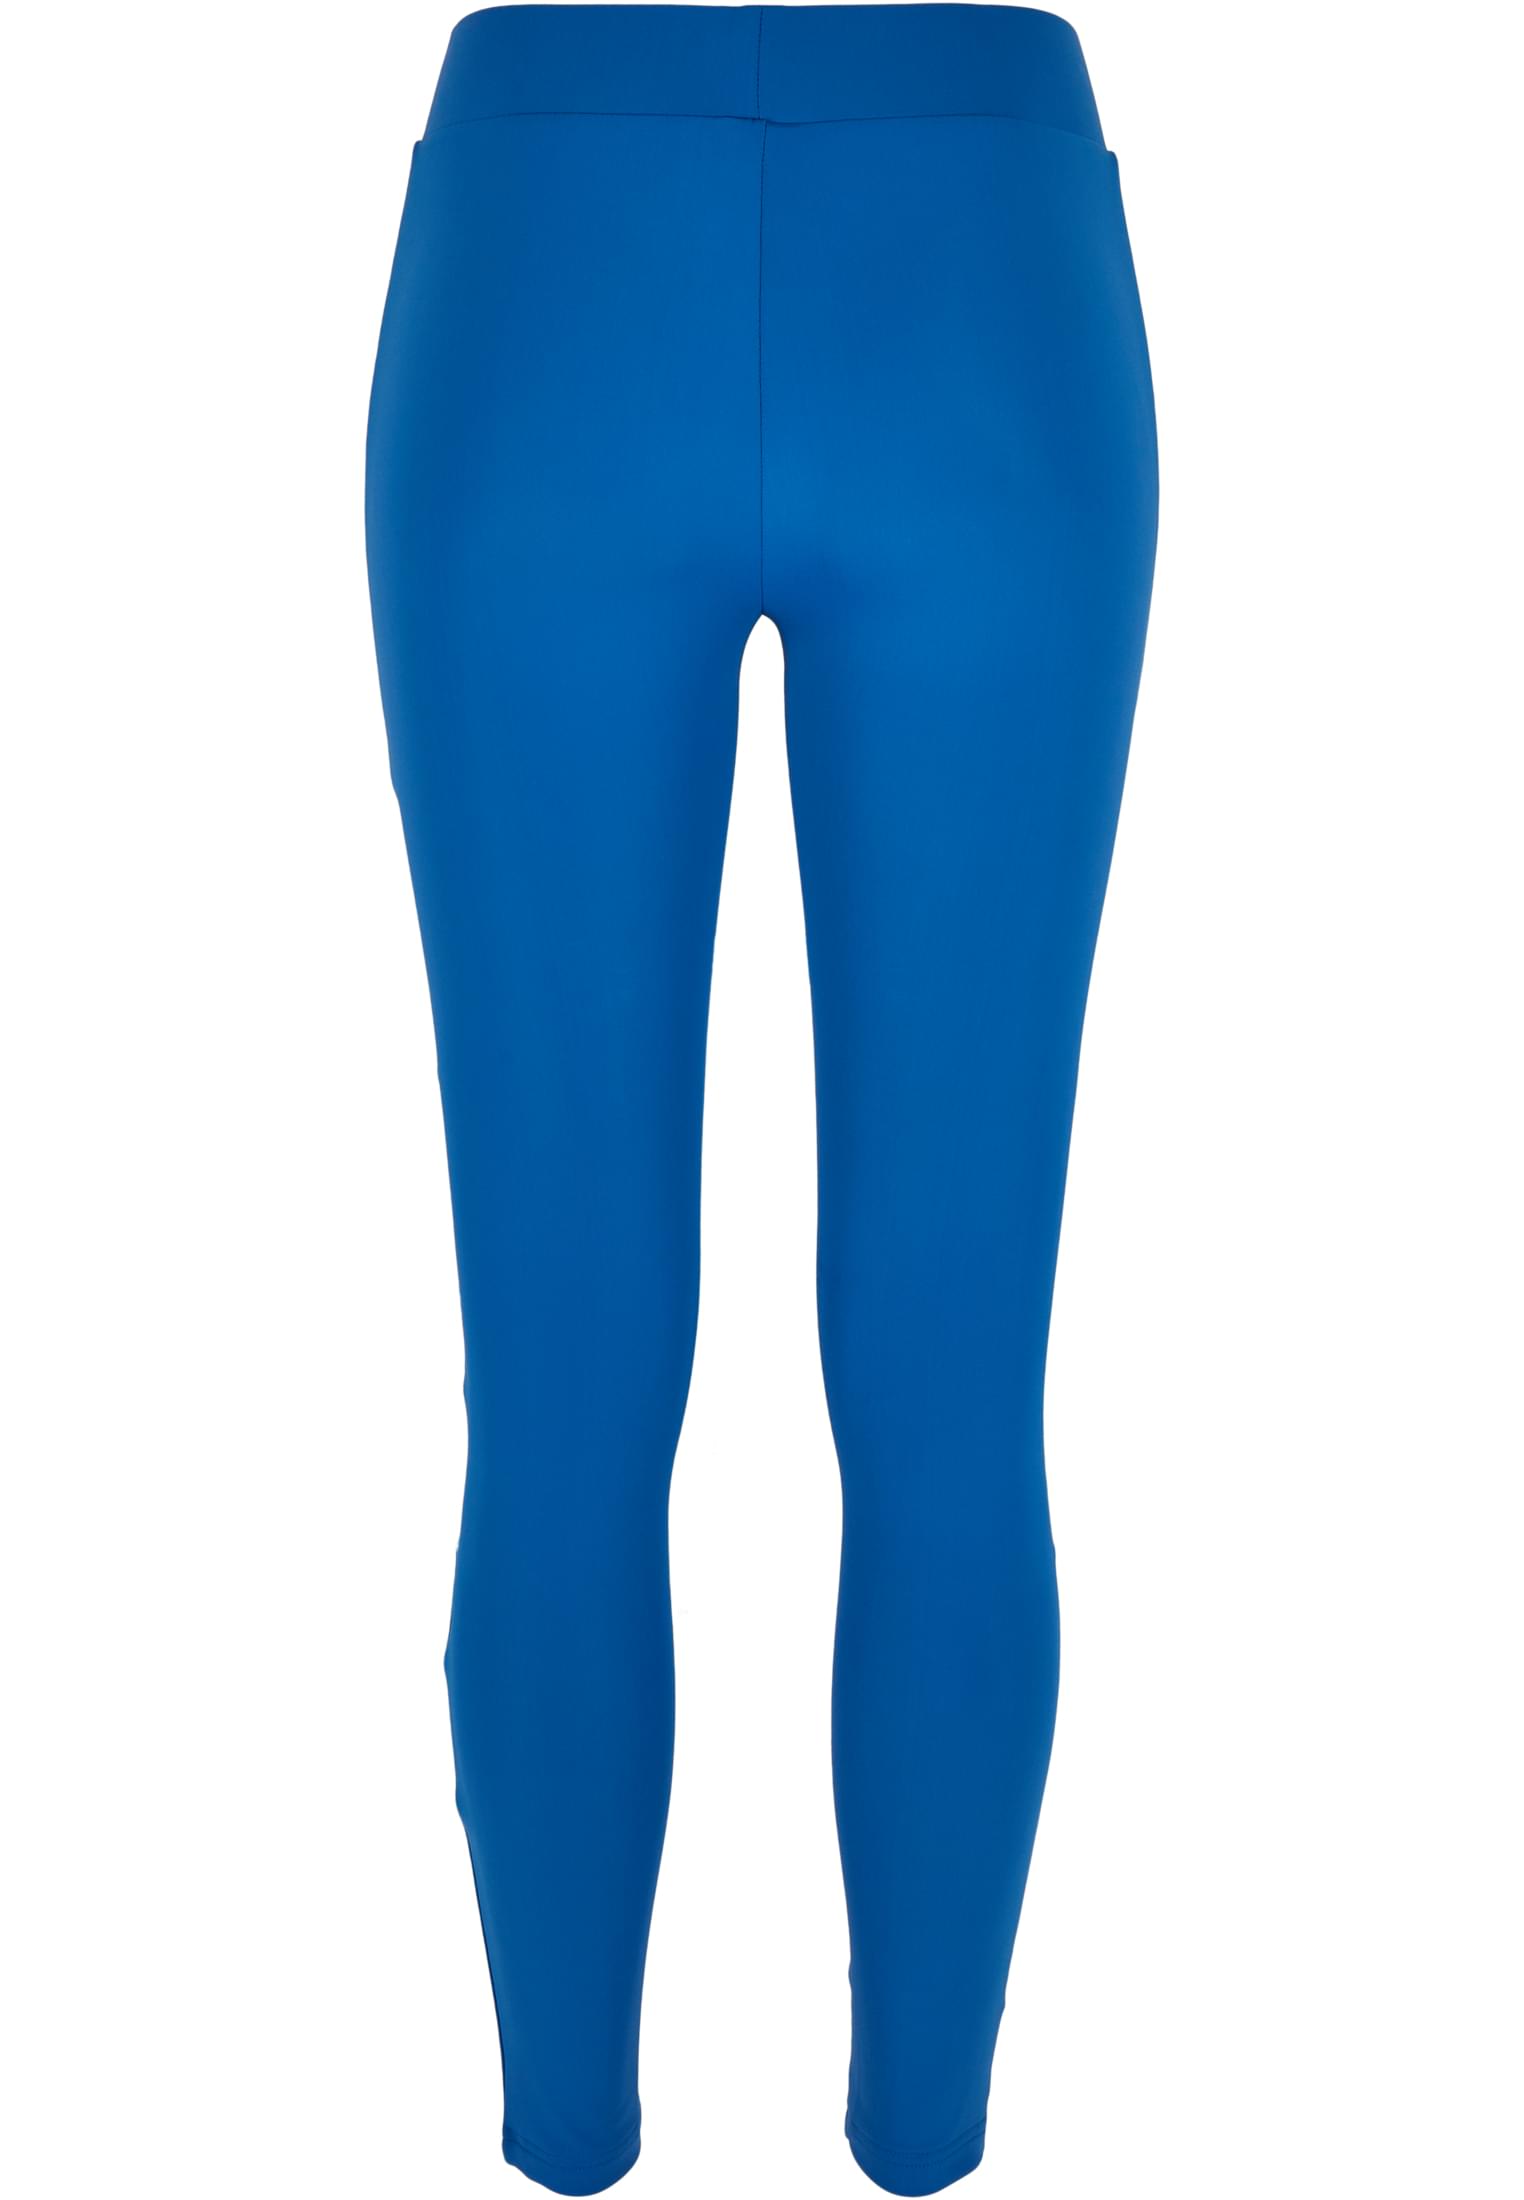 Damen Ladies Tech Mesh Leggings in Farbe sporty blue